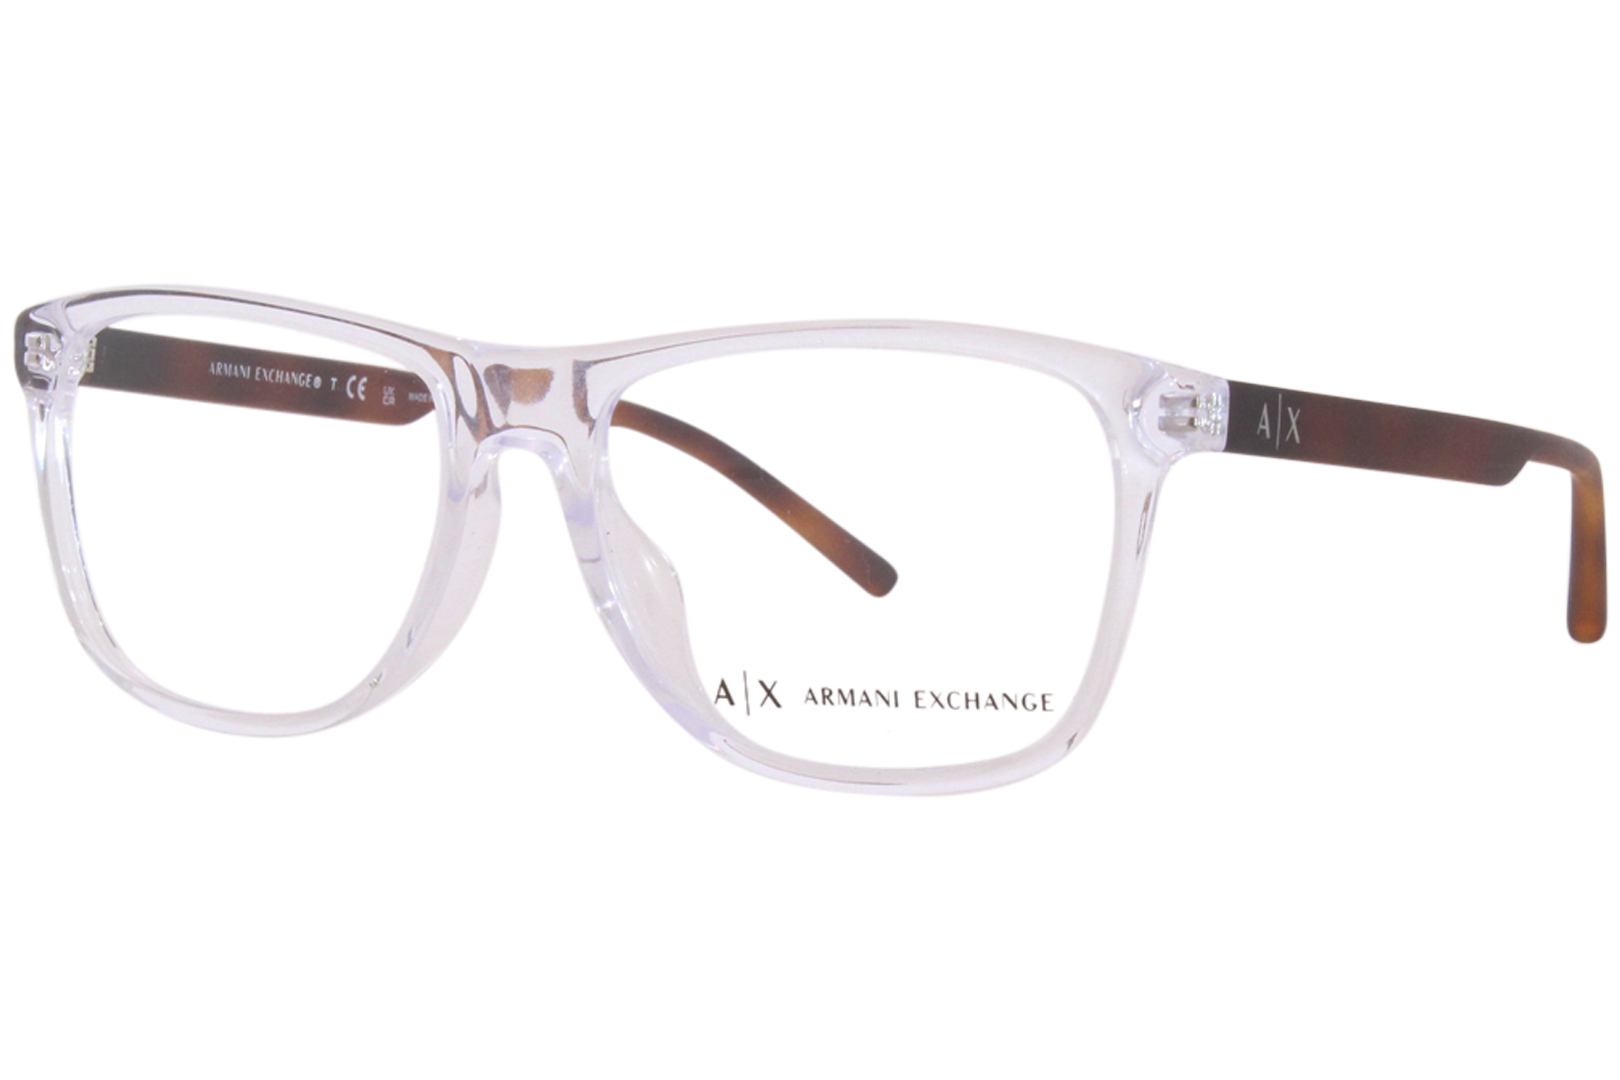 EAN 8053672807653 product image for Armani Exchange Eyeglasses Frame Men's AX3048F 8235 Shiny Crystal 56 17 145 - Cl | upcitemdb.com